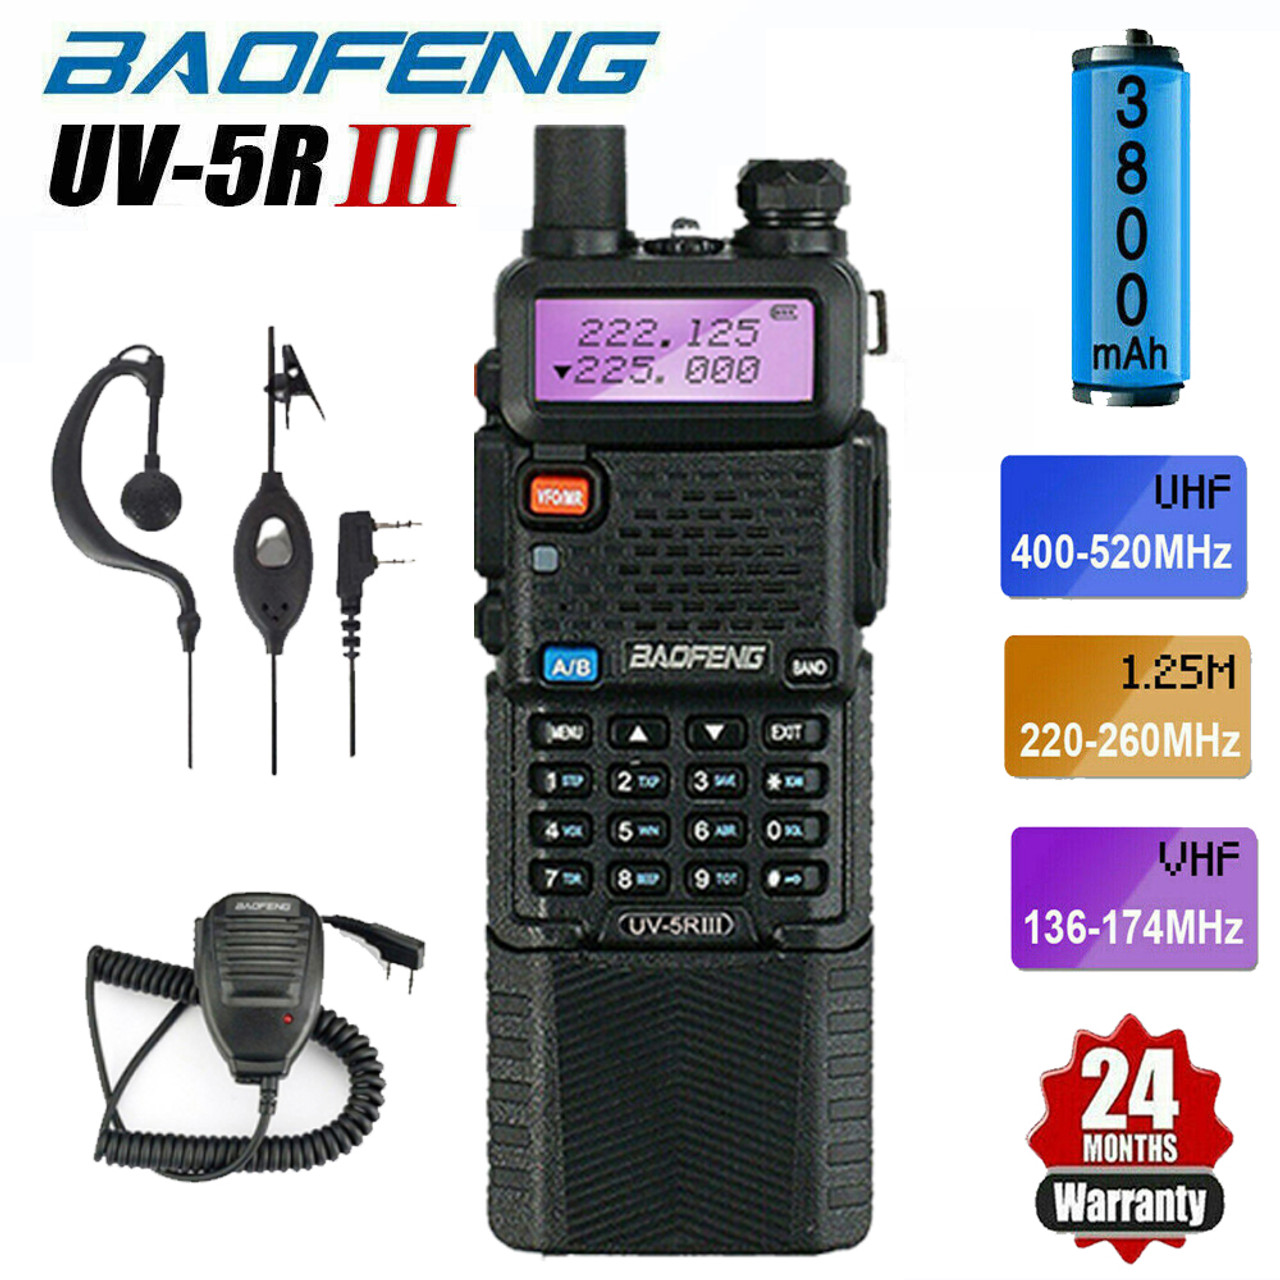 Baofeng Radio UK Baofeng UV-5R III Tri-Band 3800mAH with Handheld Mic